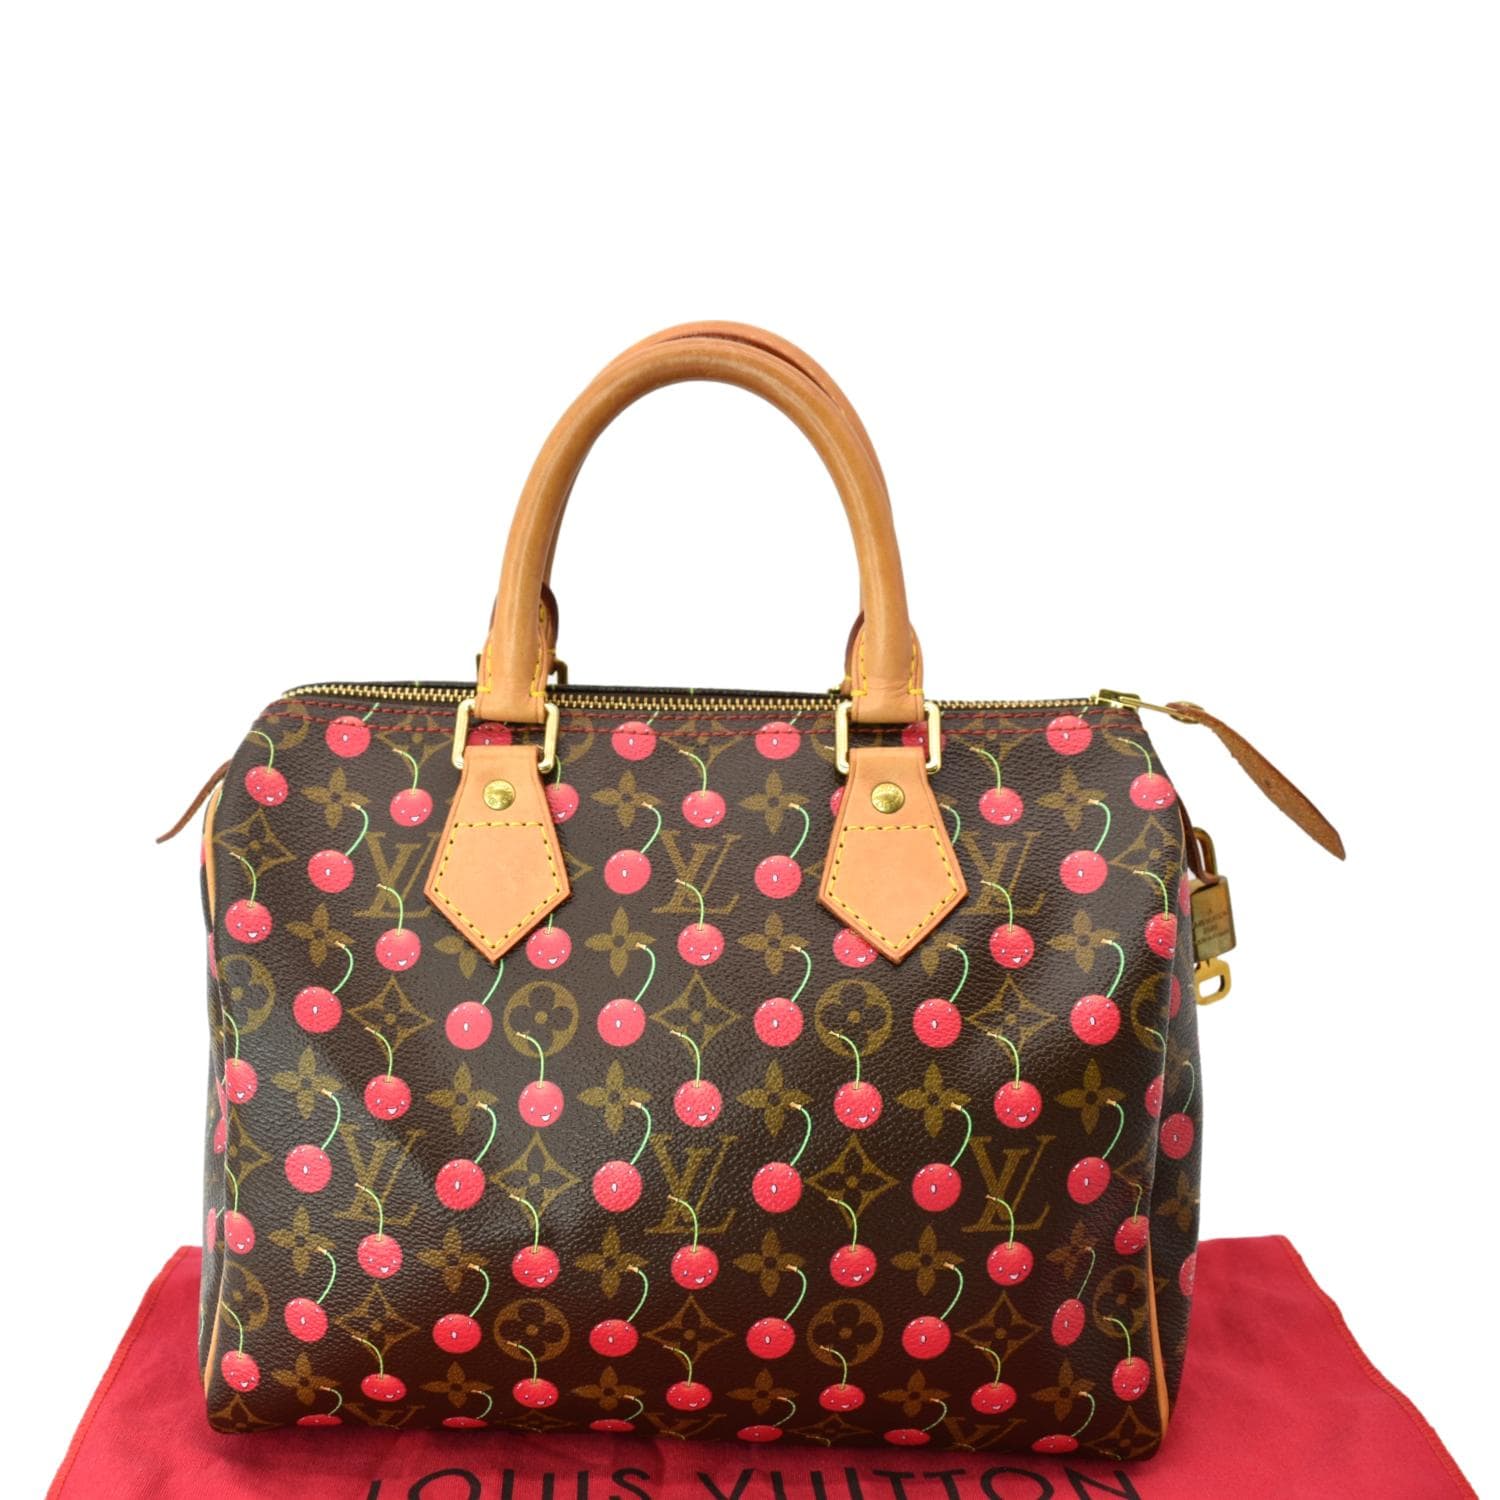 LOUIS VUITTON Cherry Speedy 25 🍒🍒🍒 - I LOVE THIS BAG! 